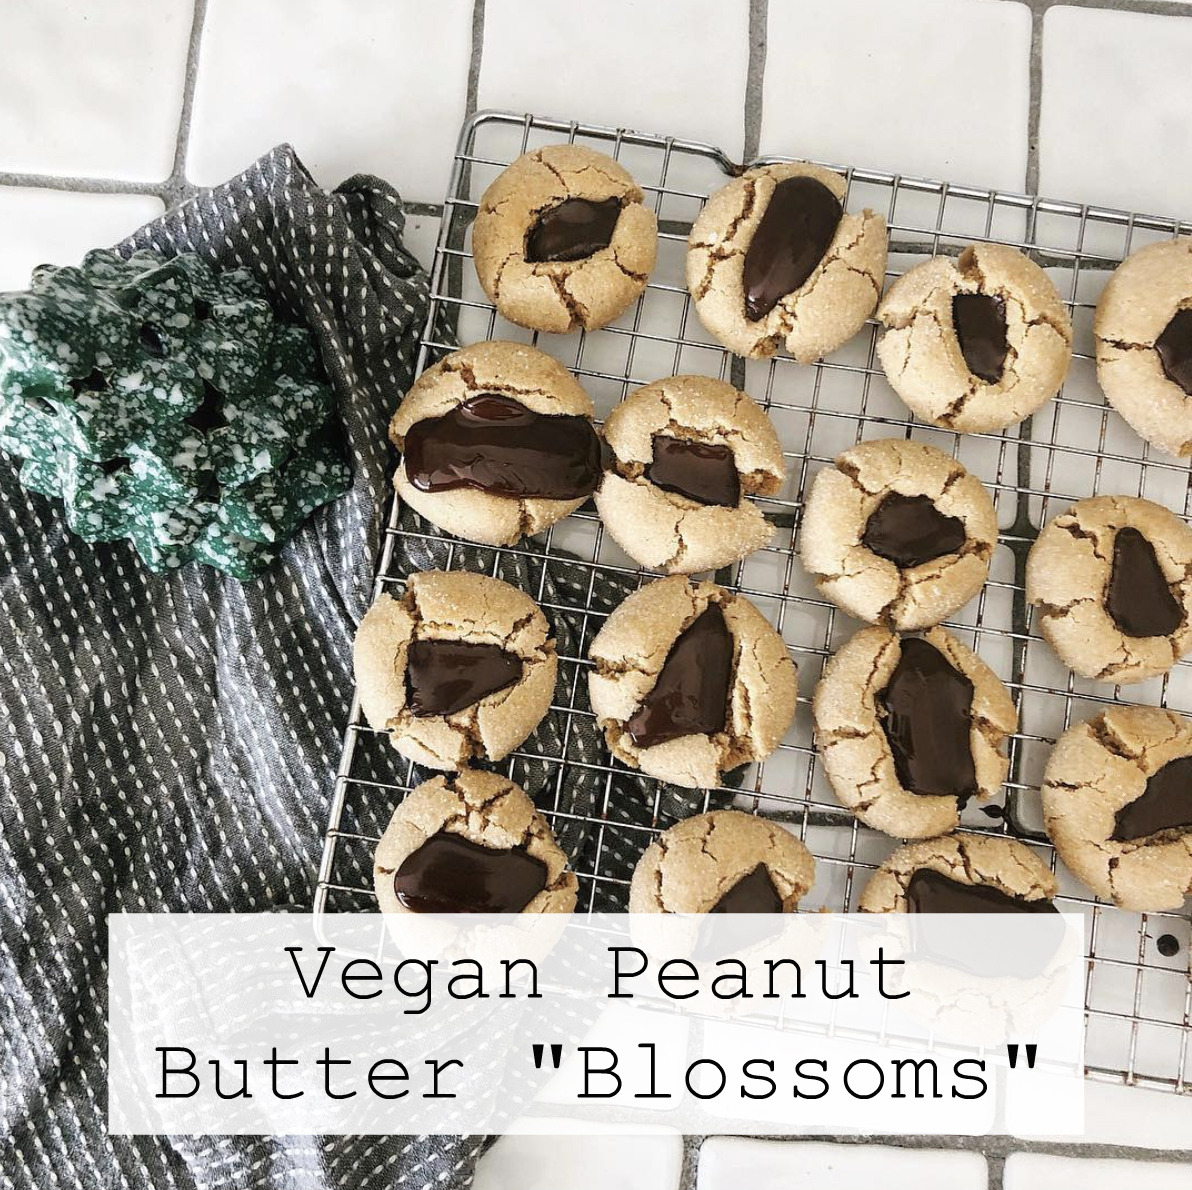 Vegan Peanut Butter "Blossoms"